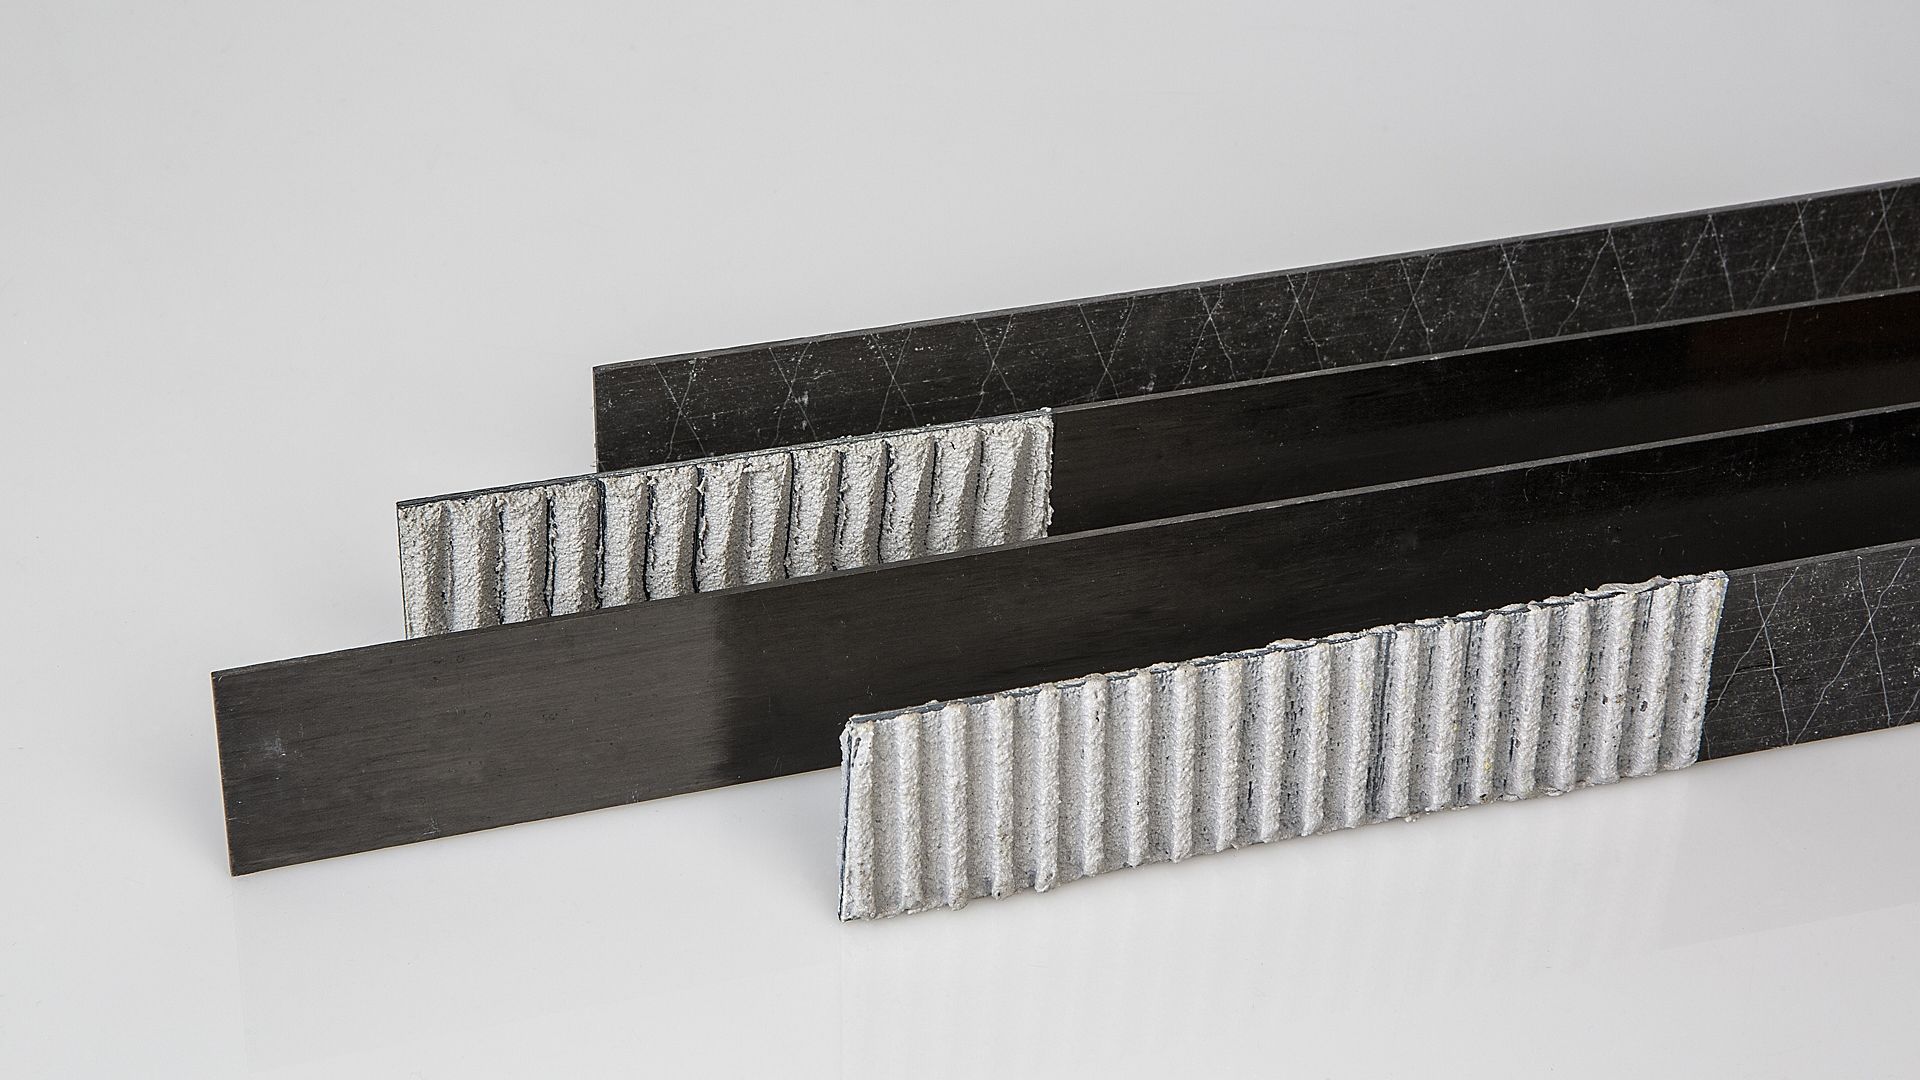 Sika CarboDur carbon fiber reinforced polymer plates for structural strengthening